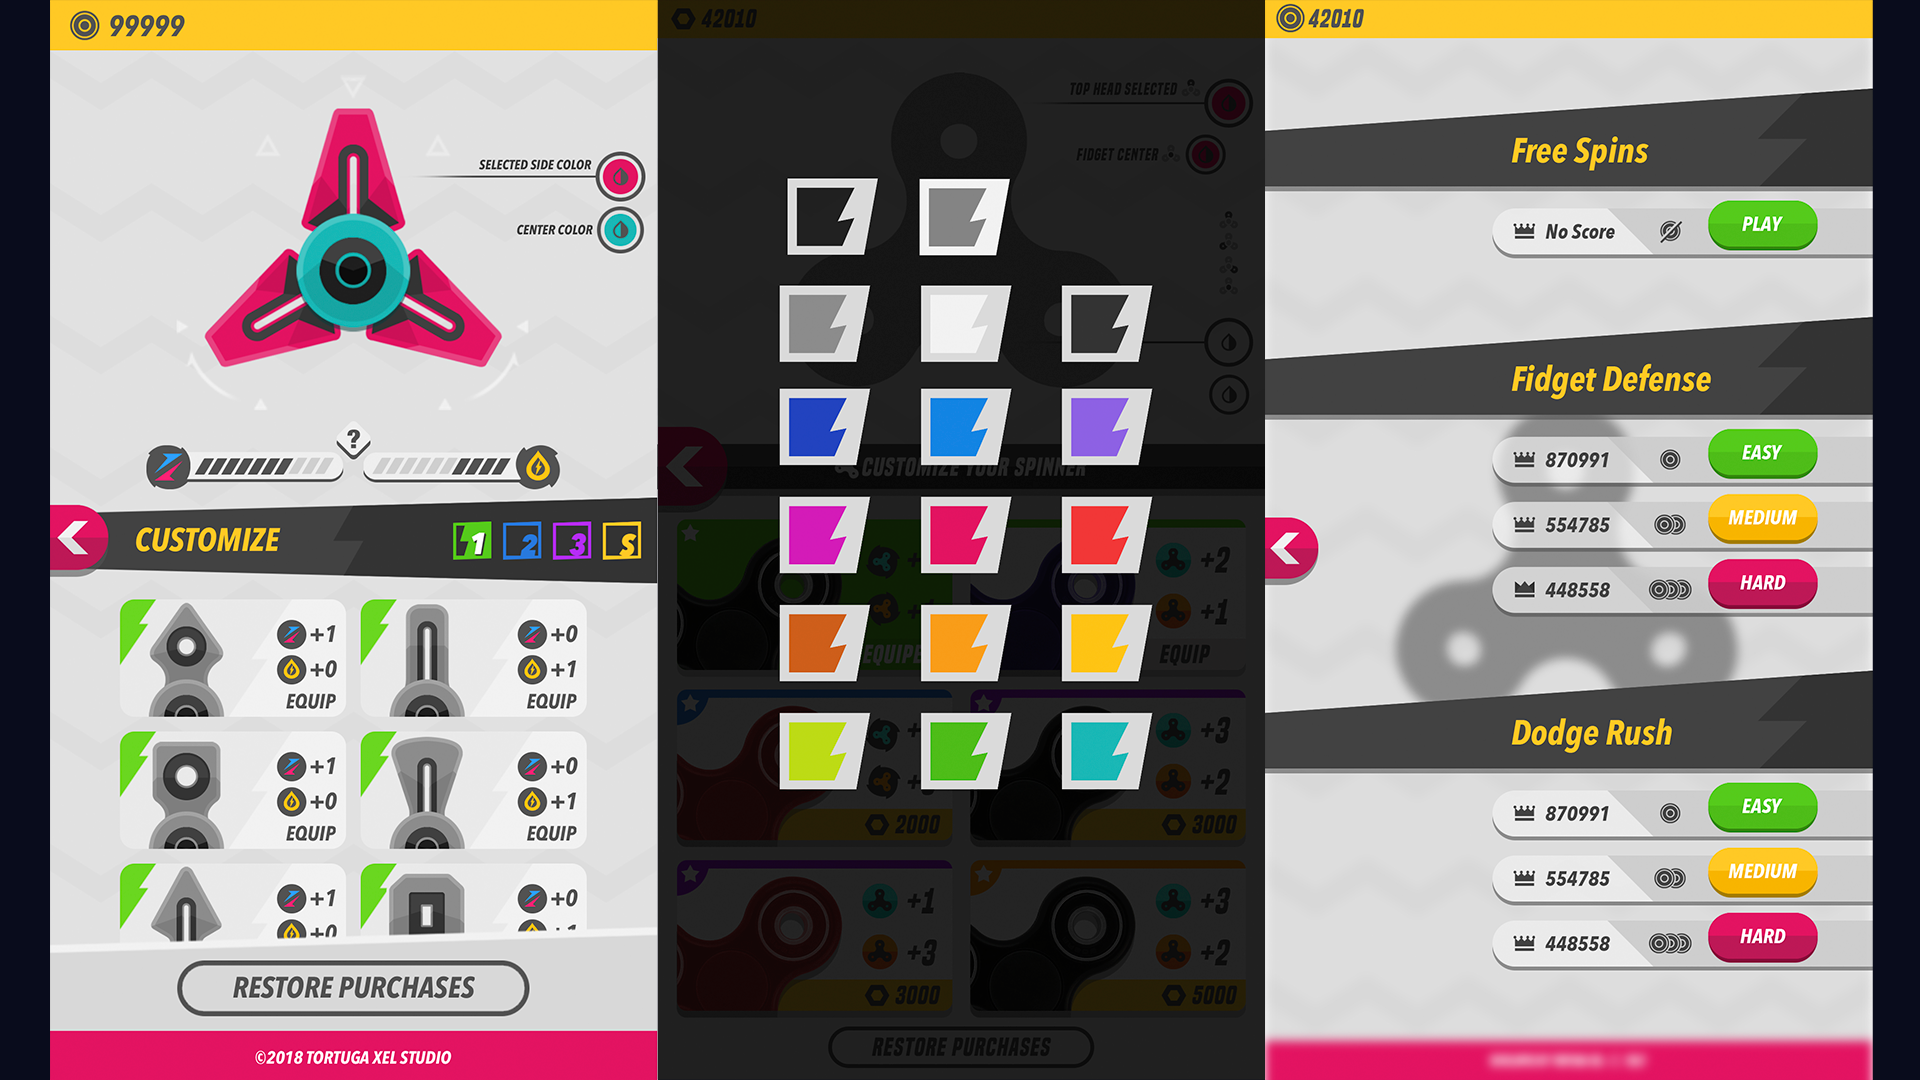 Fidget Winner - Store / Colors / Mode Selection UIs